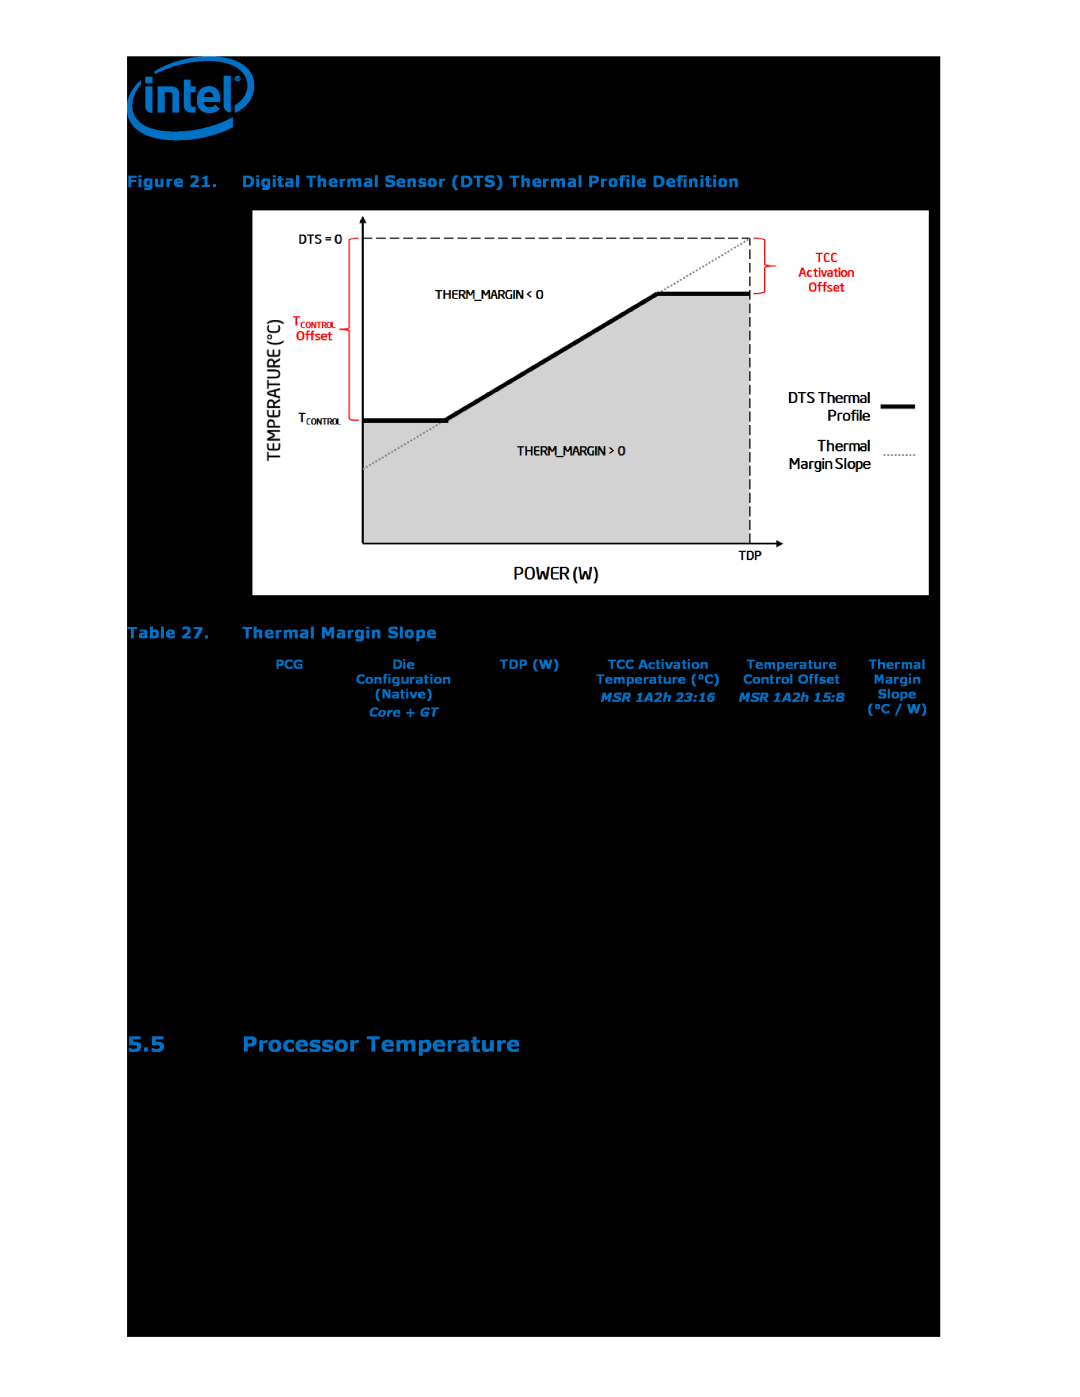 Intel BX80646I74770K Processor Temperature, Digital Thermal Sensor DTS Thermal Profile Definition, Thermal Margin Slope 